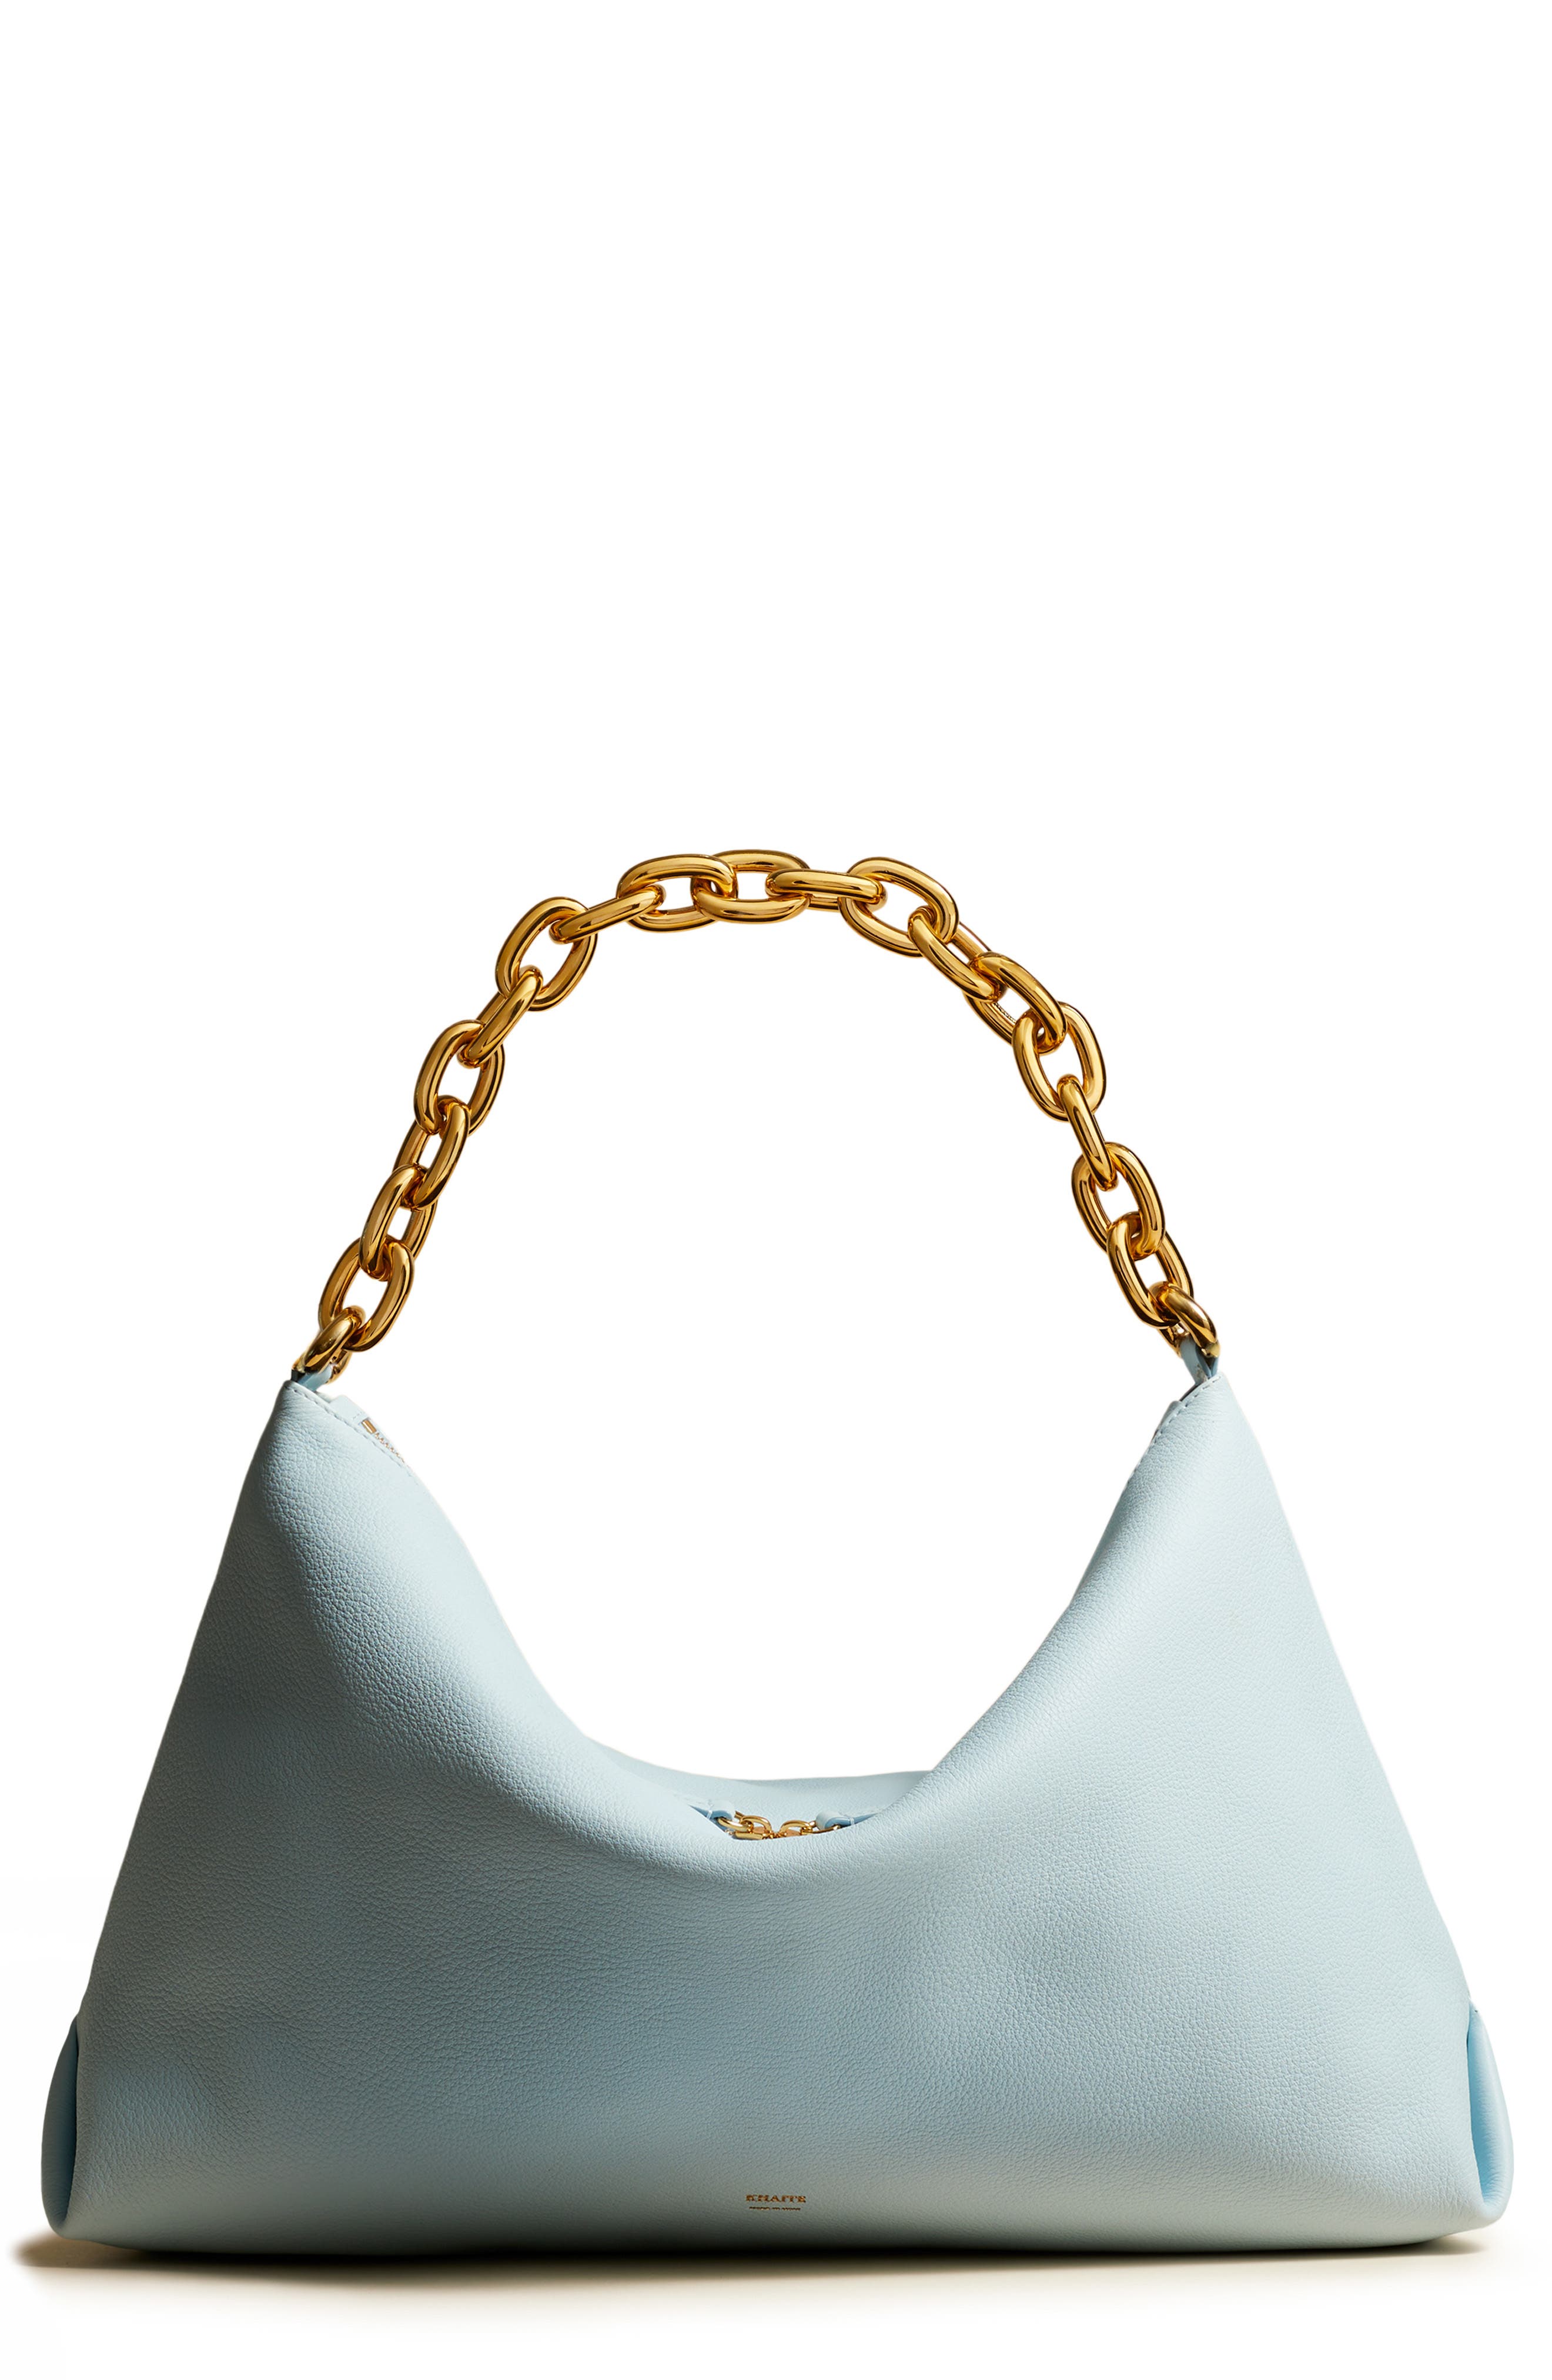 Would you buy a Dior or Gucci handbag? - Quora